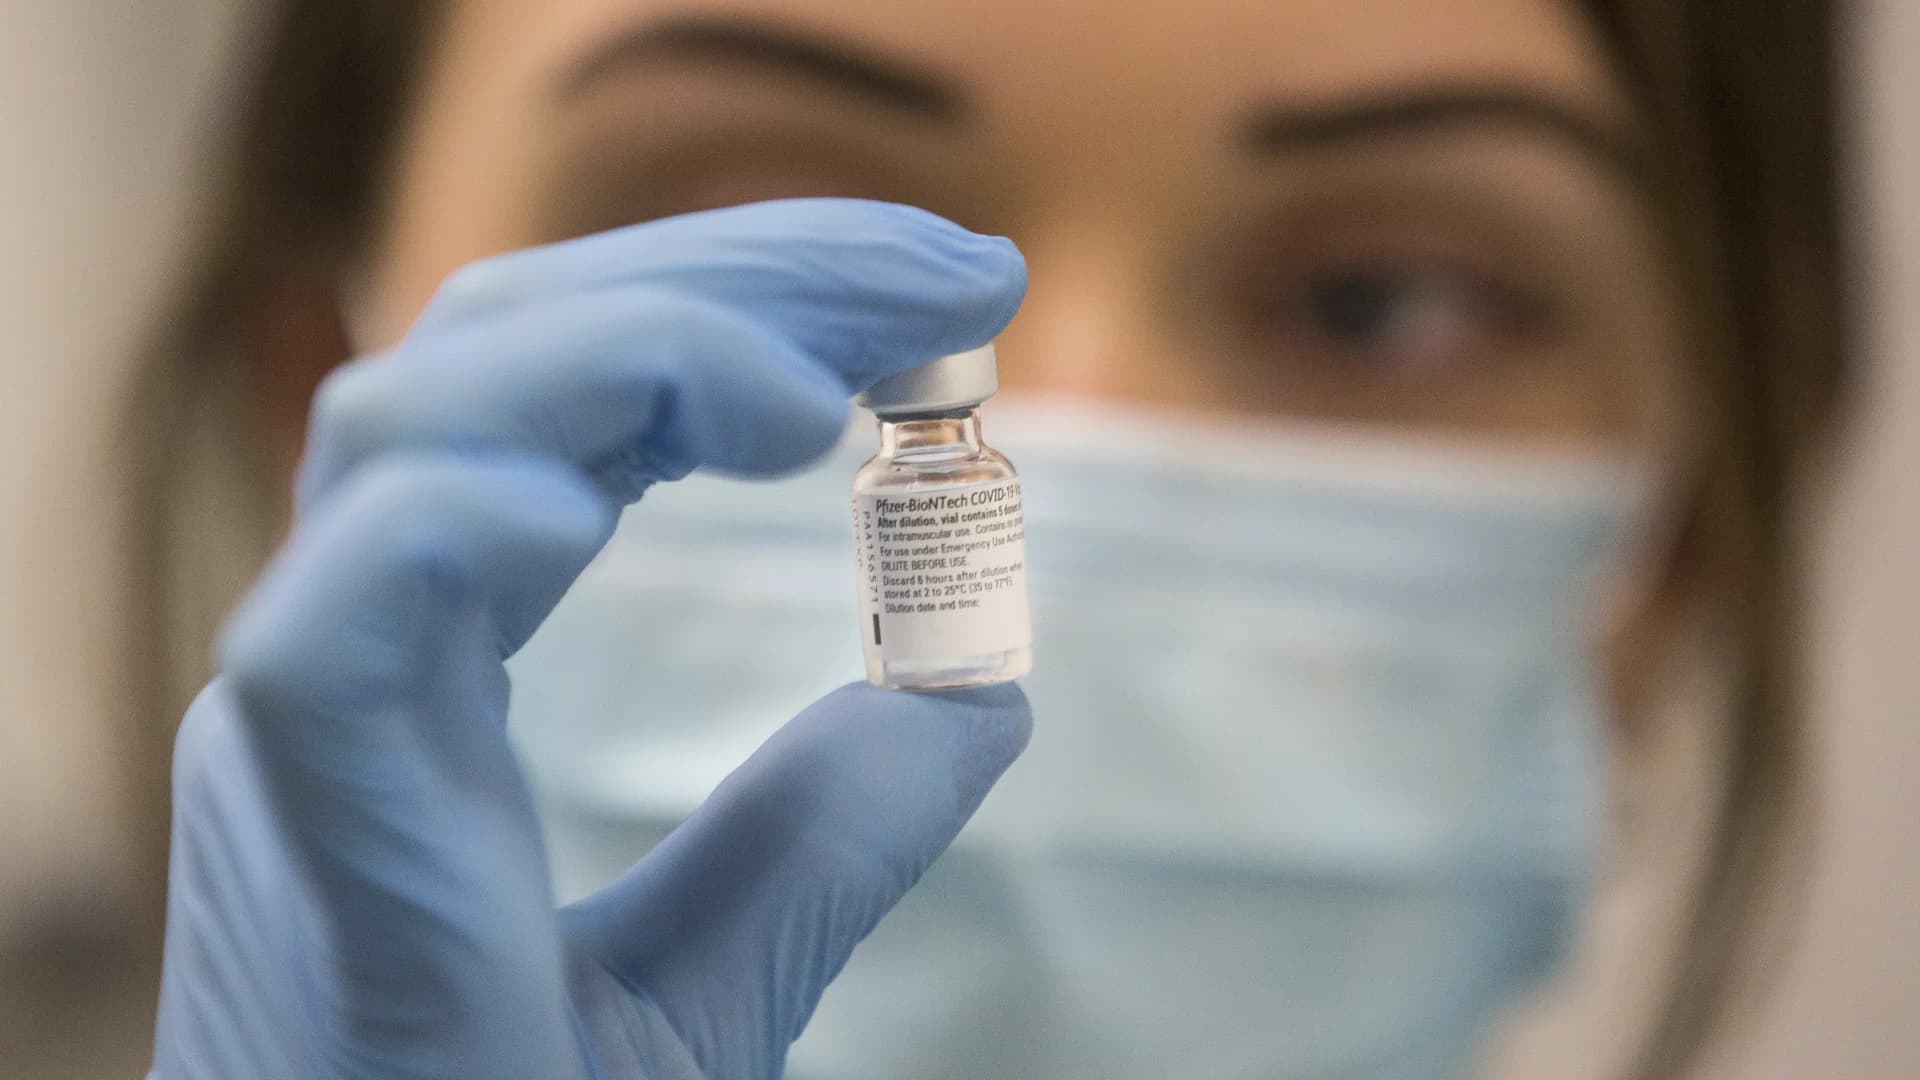 U.S. regulators post positive review of Pfizer vaccine data